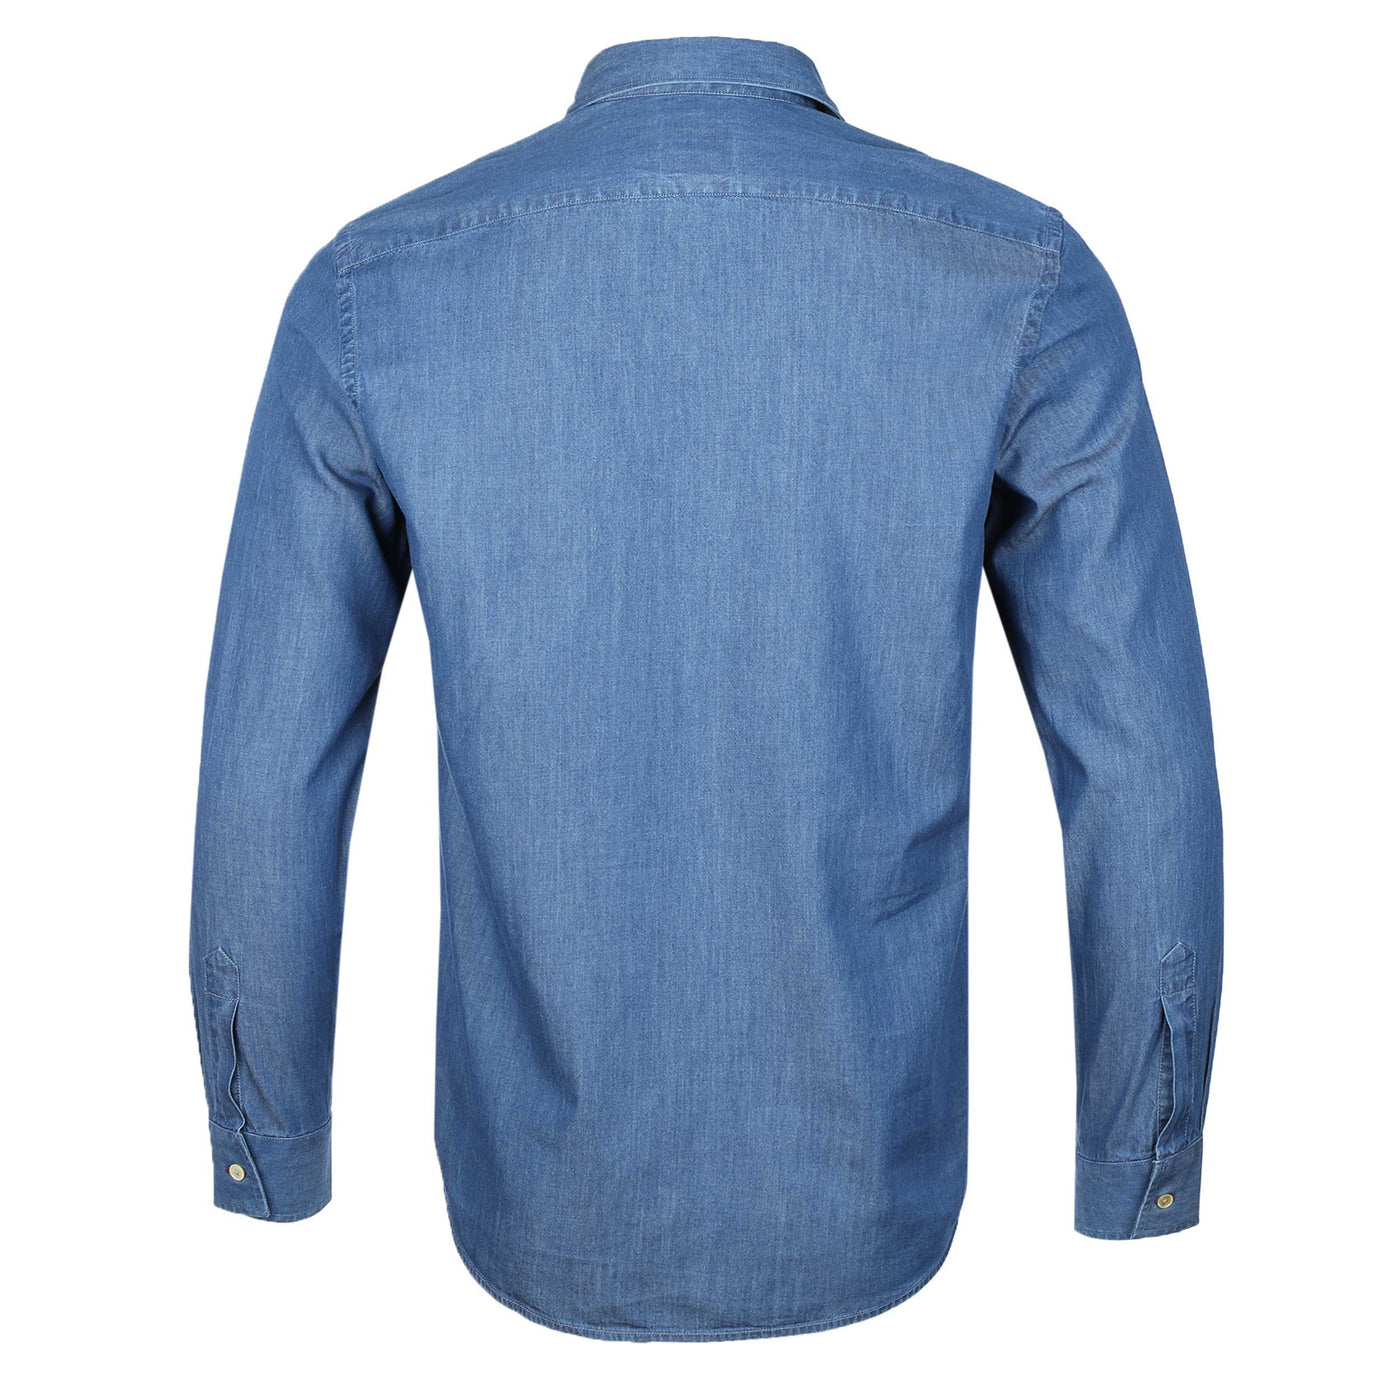 Paul Smith Regular Fit Shirt in Denim Blue Back